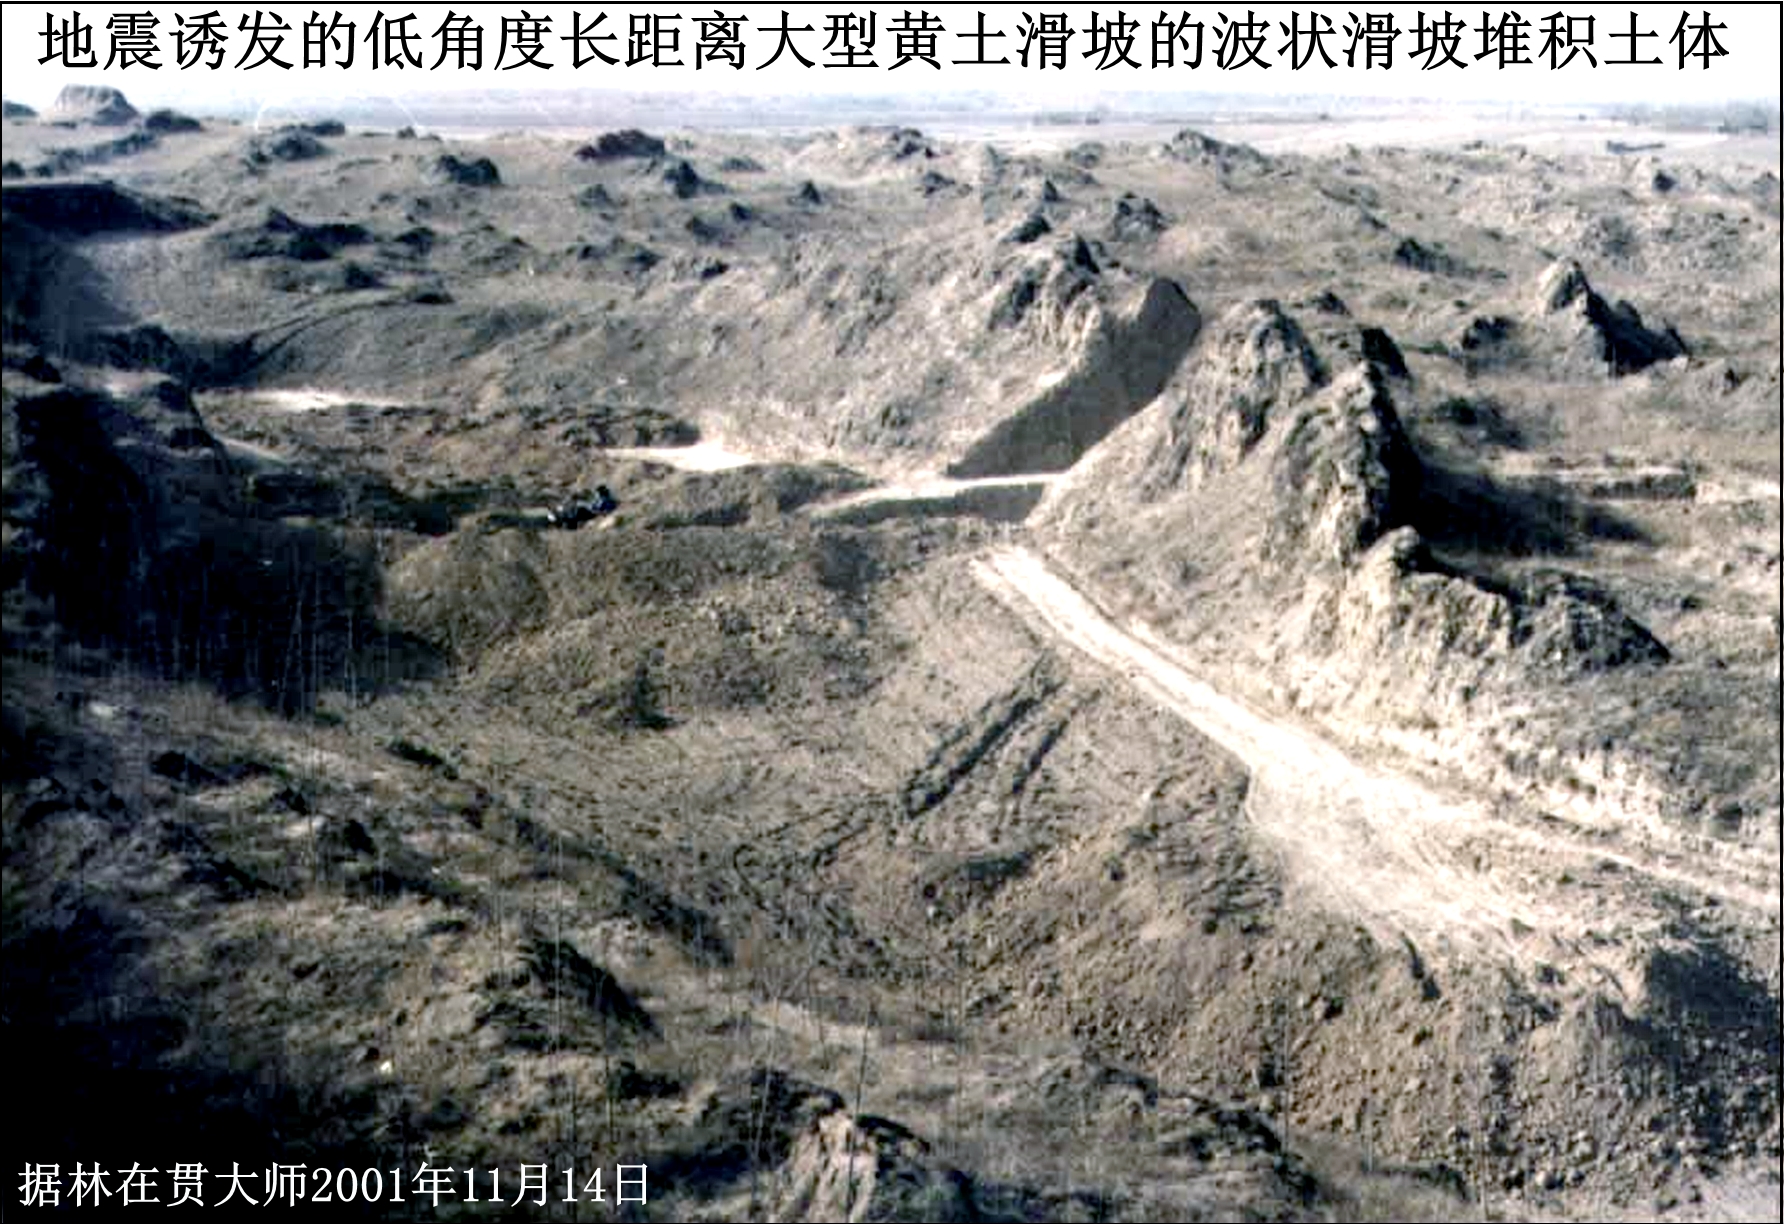 Landslide1.jpg